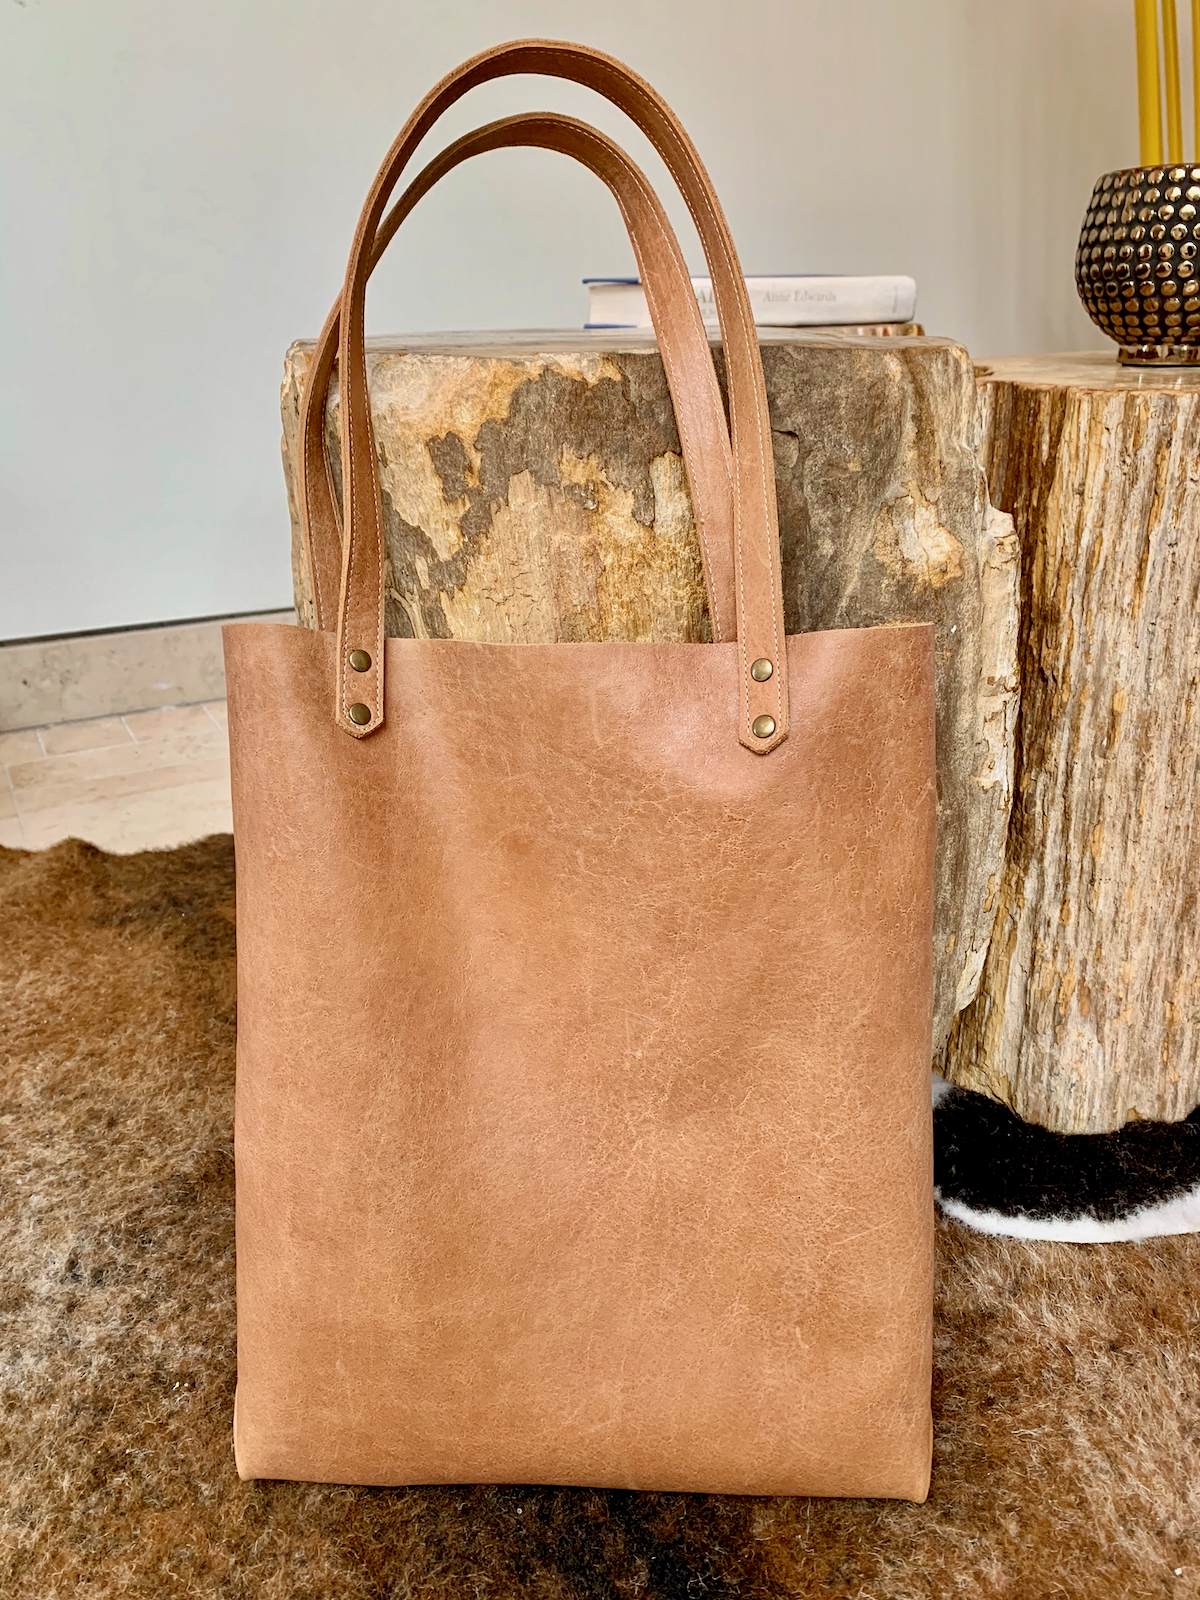 Make a Leather Tote Bag